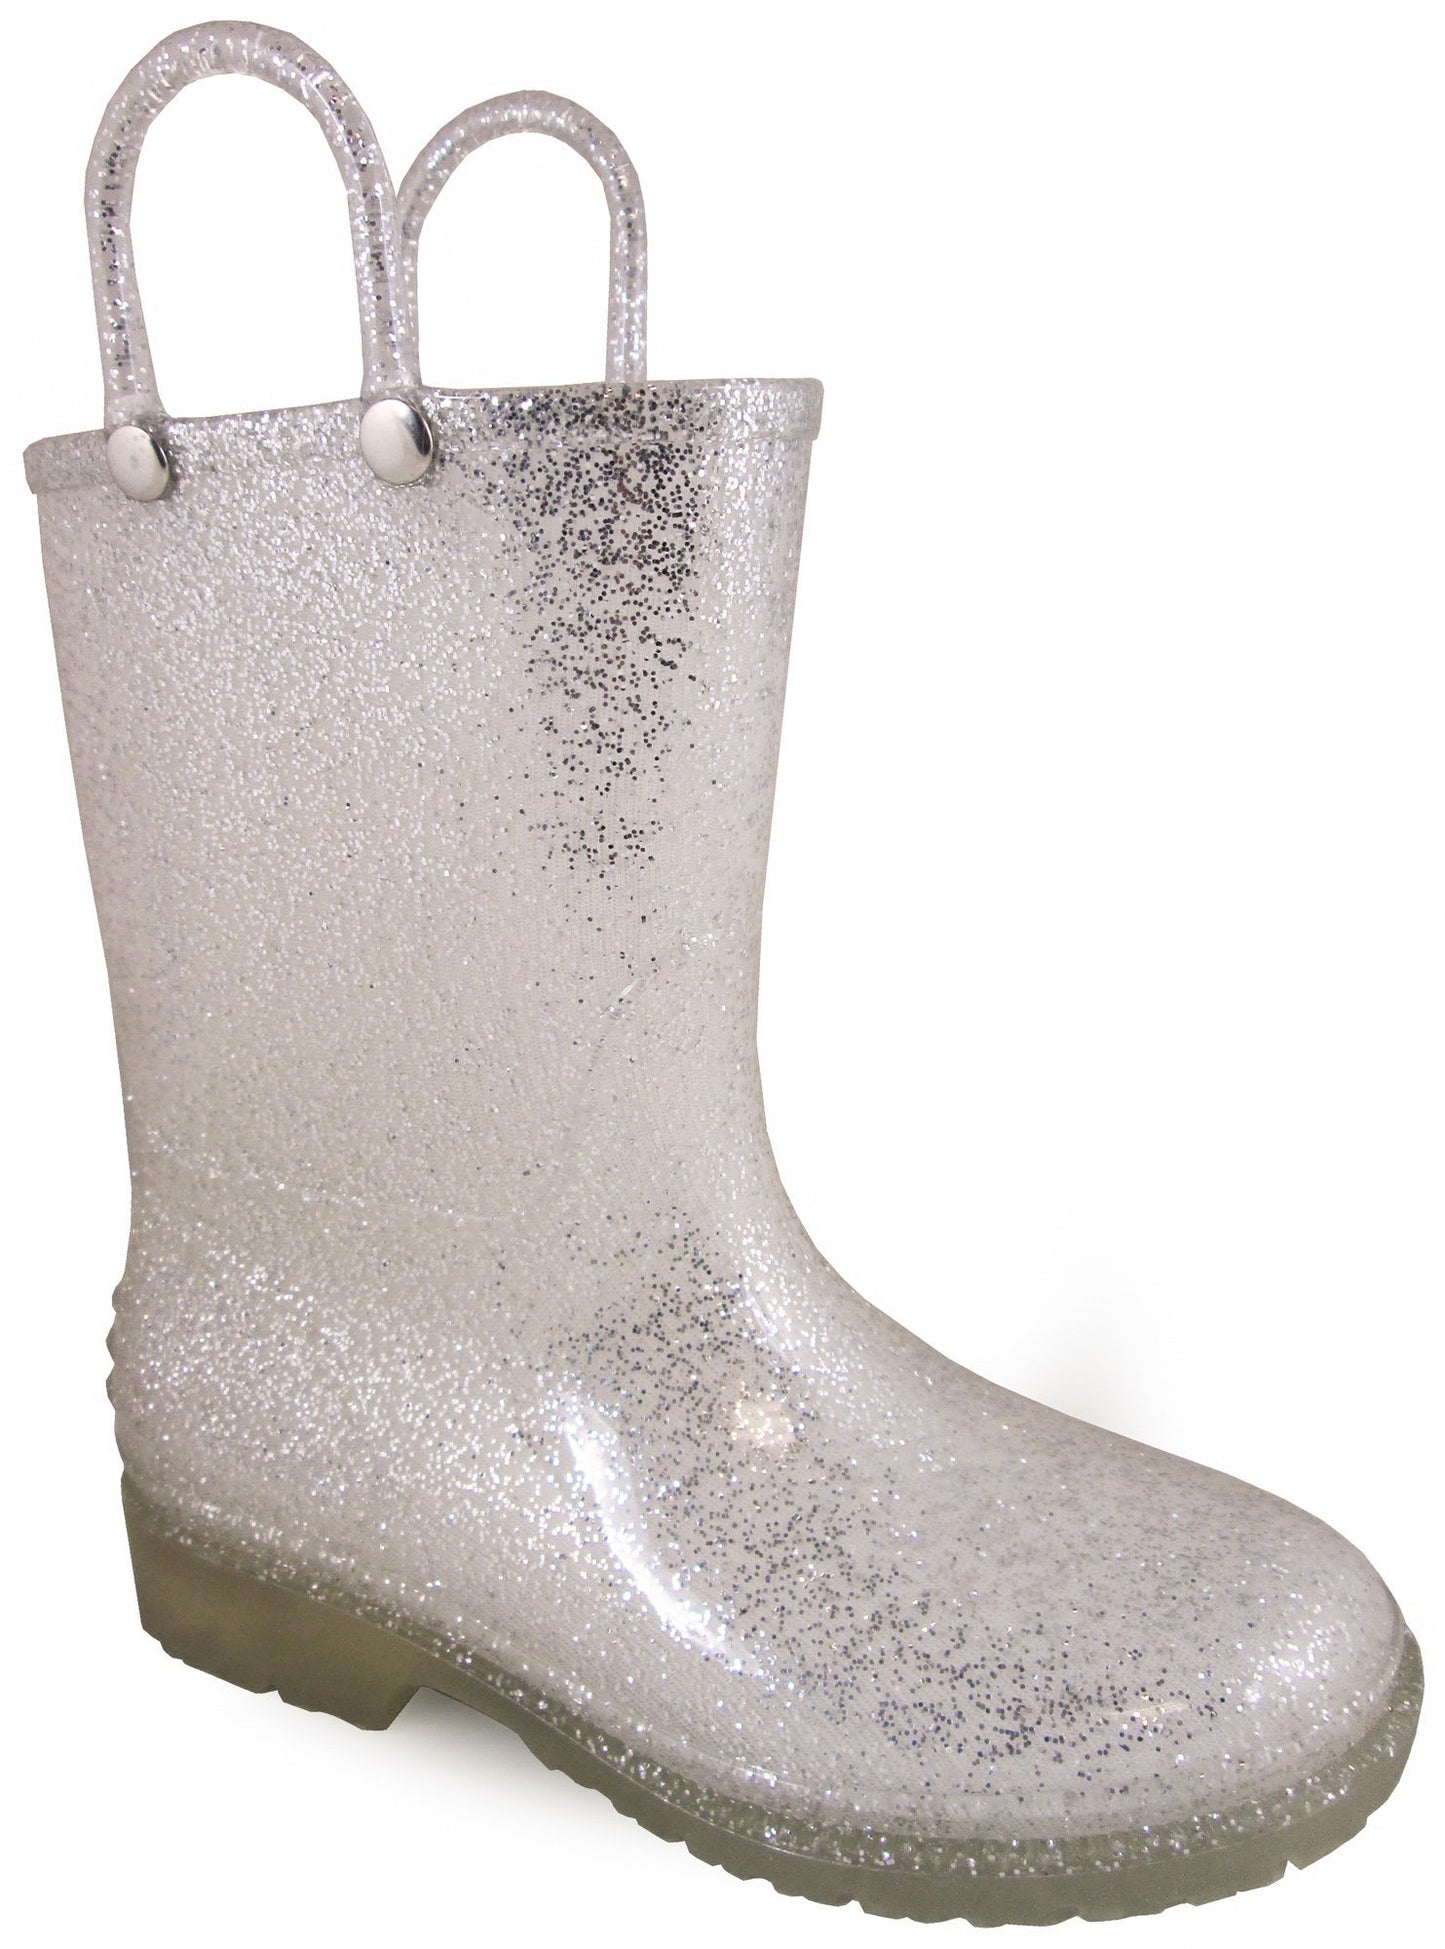 2720 Smoky Mountain Boots STARDUST rubber rain boots